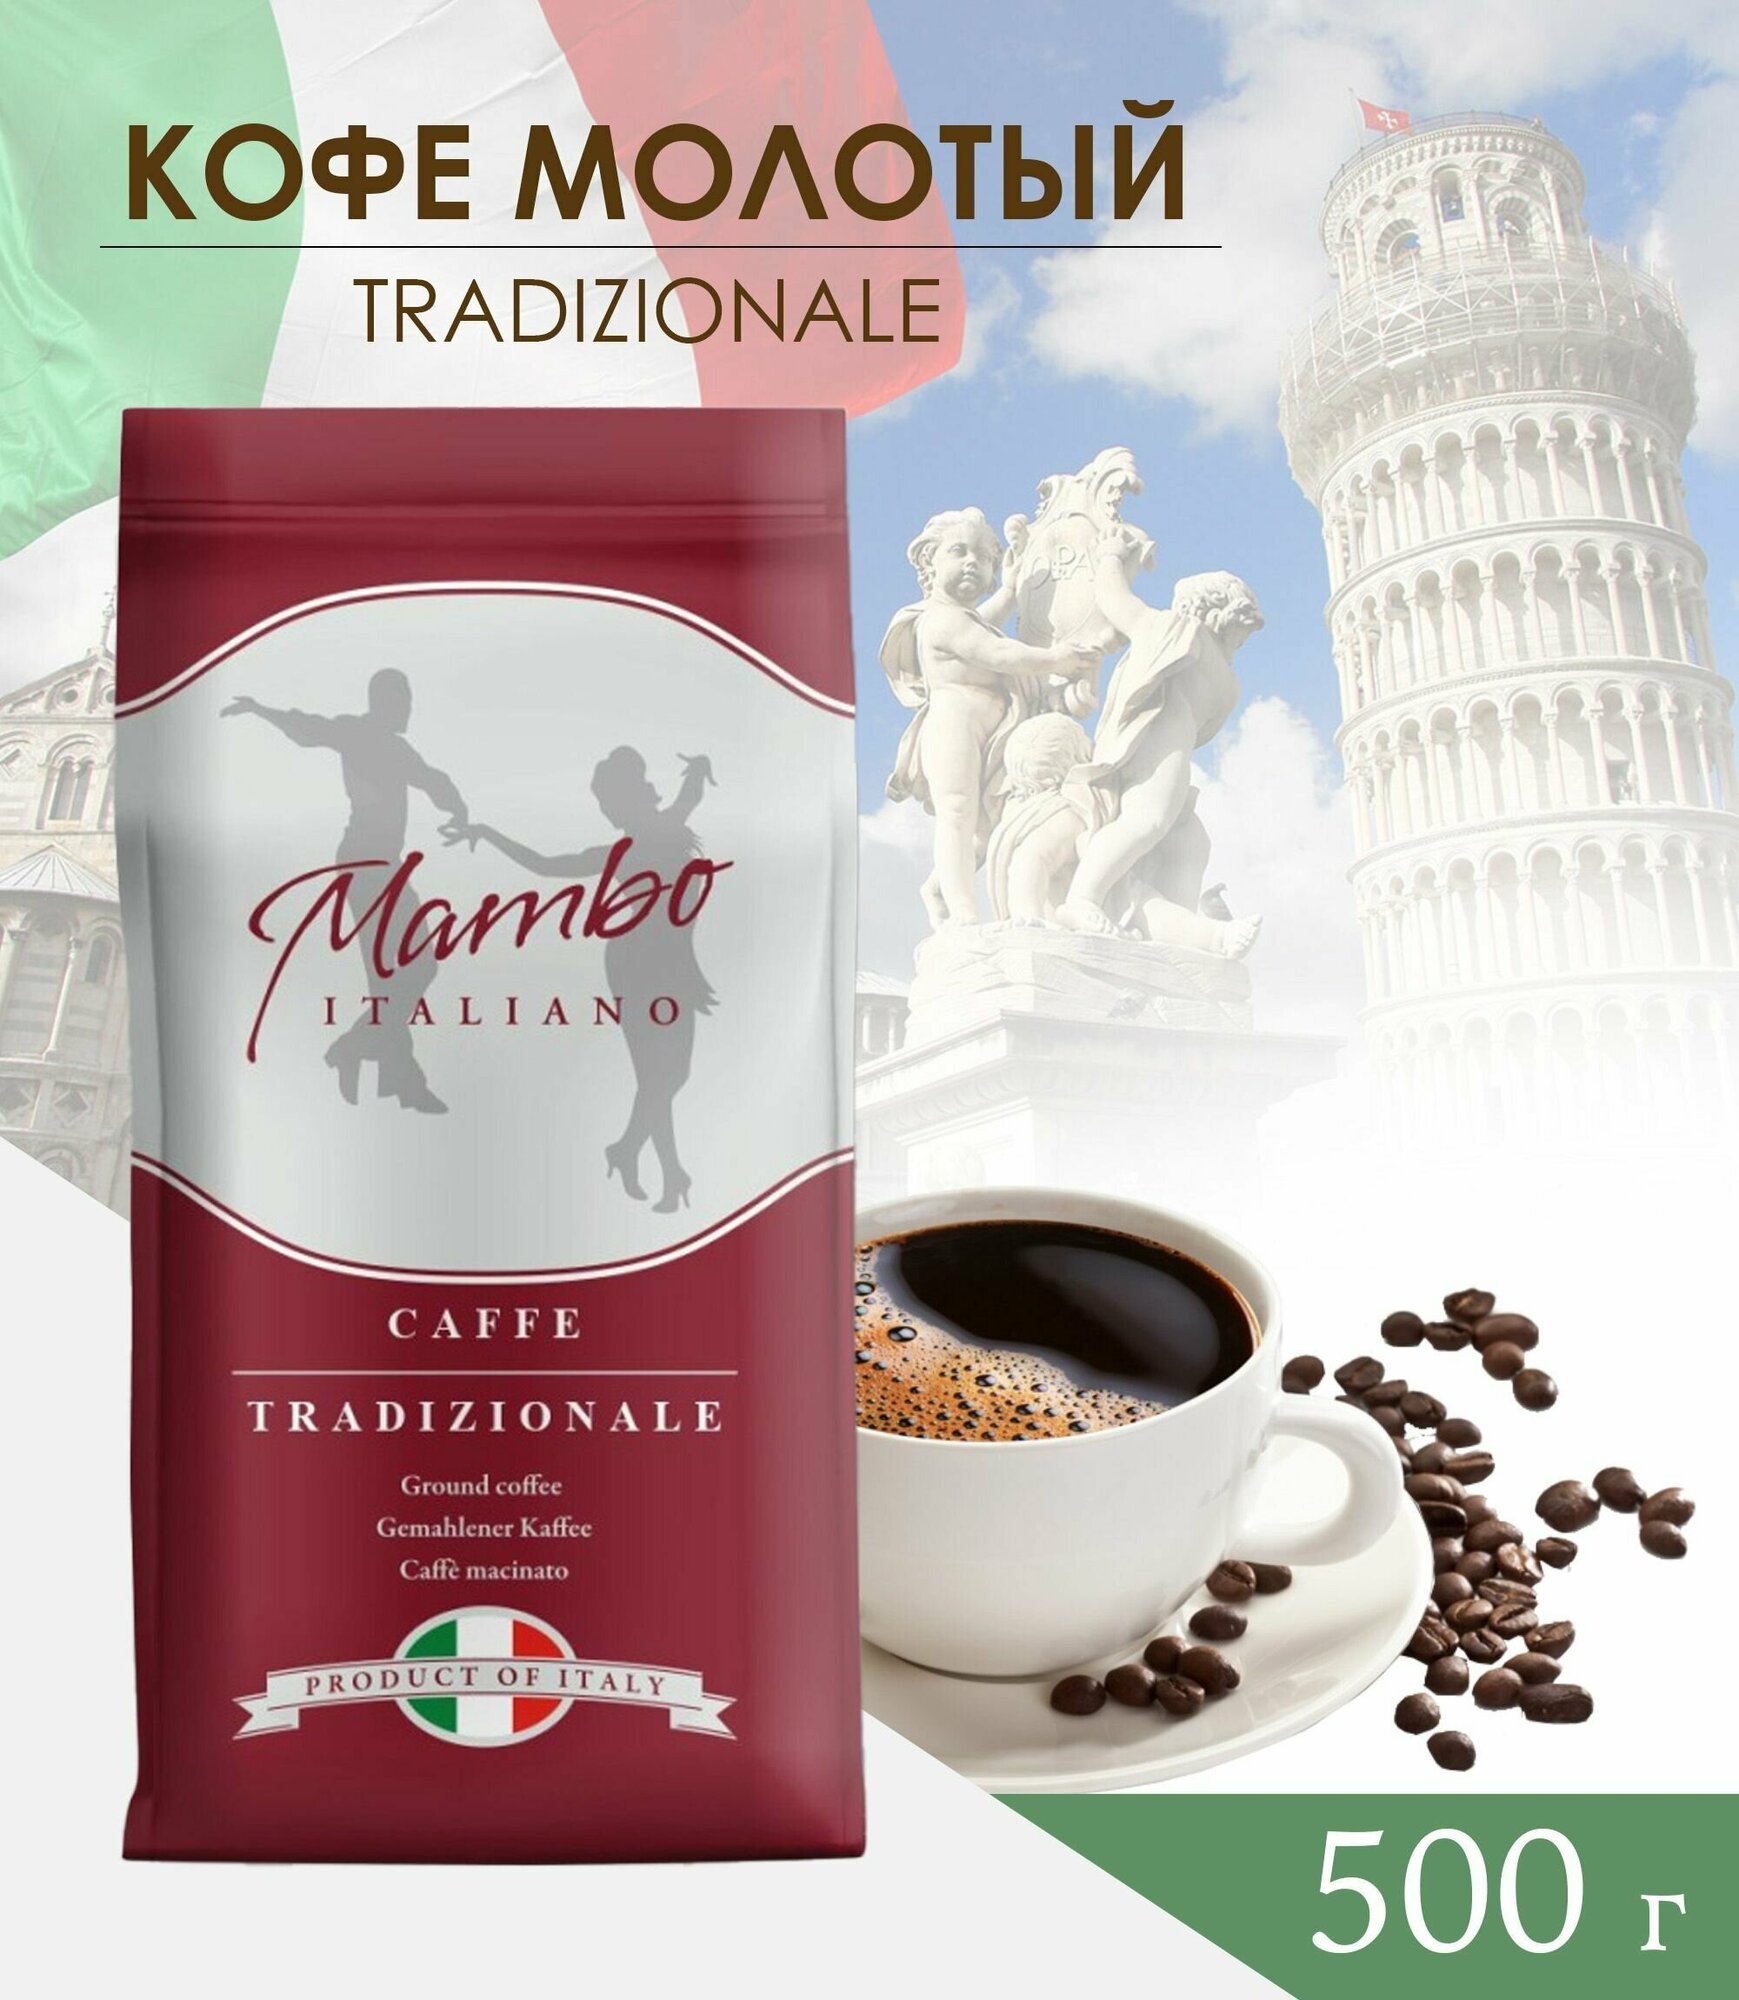 Кофе молотый Mambo ITALIANO Tradizionale, 500 г - фотография № 1